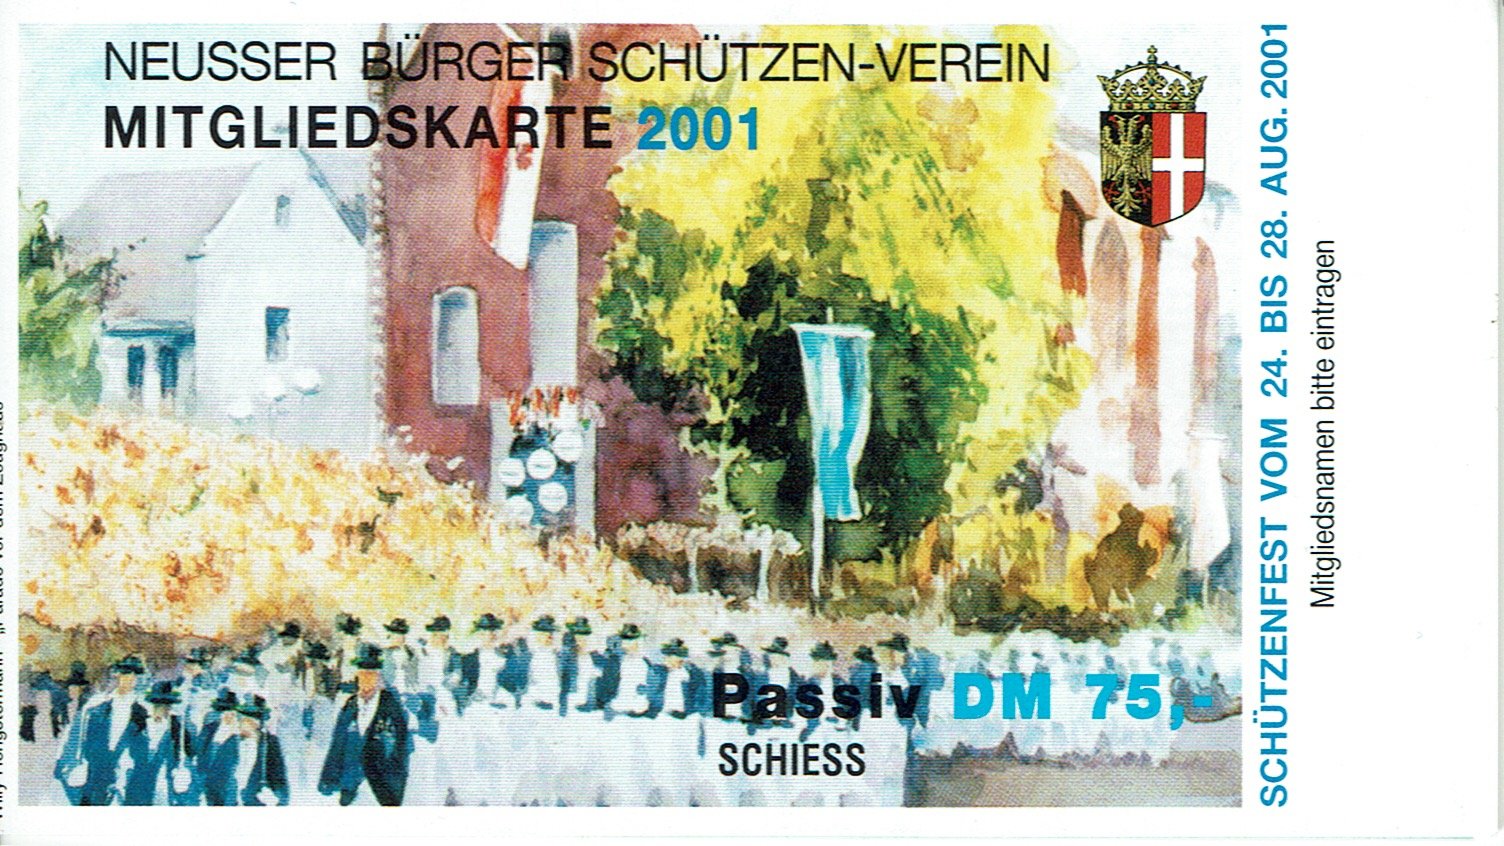 Festkarte Neuss 2001 (passiv) VS (Rheinisches Schützenmuseum Neuss CC BY-NC-SA)